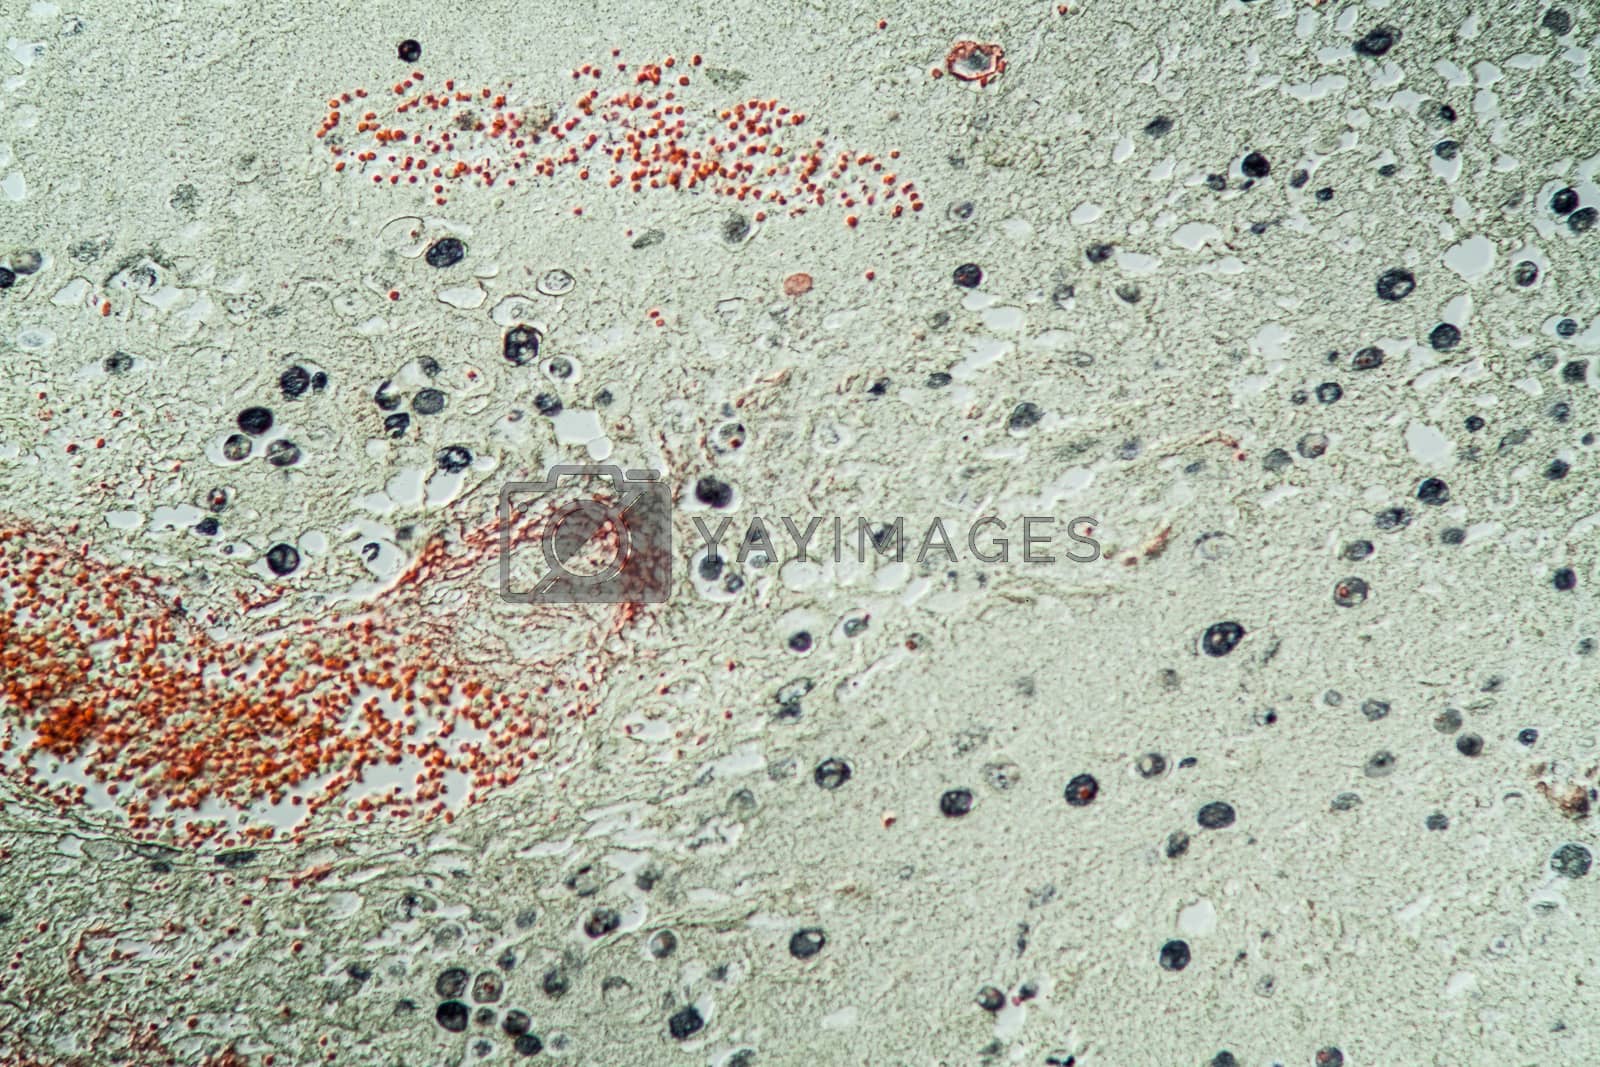 Royalty free image of Amoeba parasite tissue under the microscope 200x by Dr-Lange